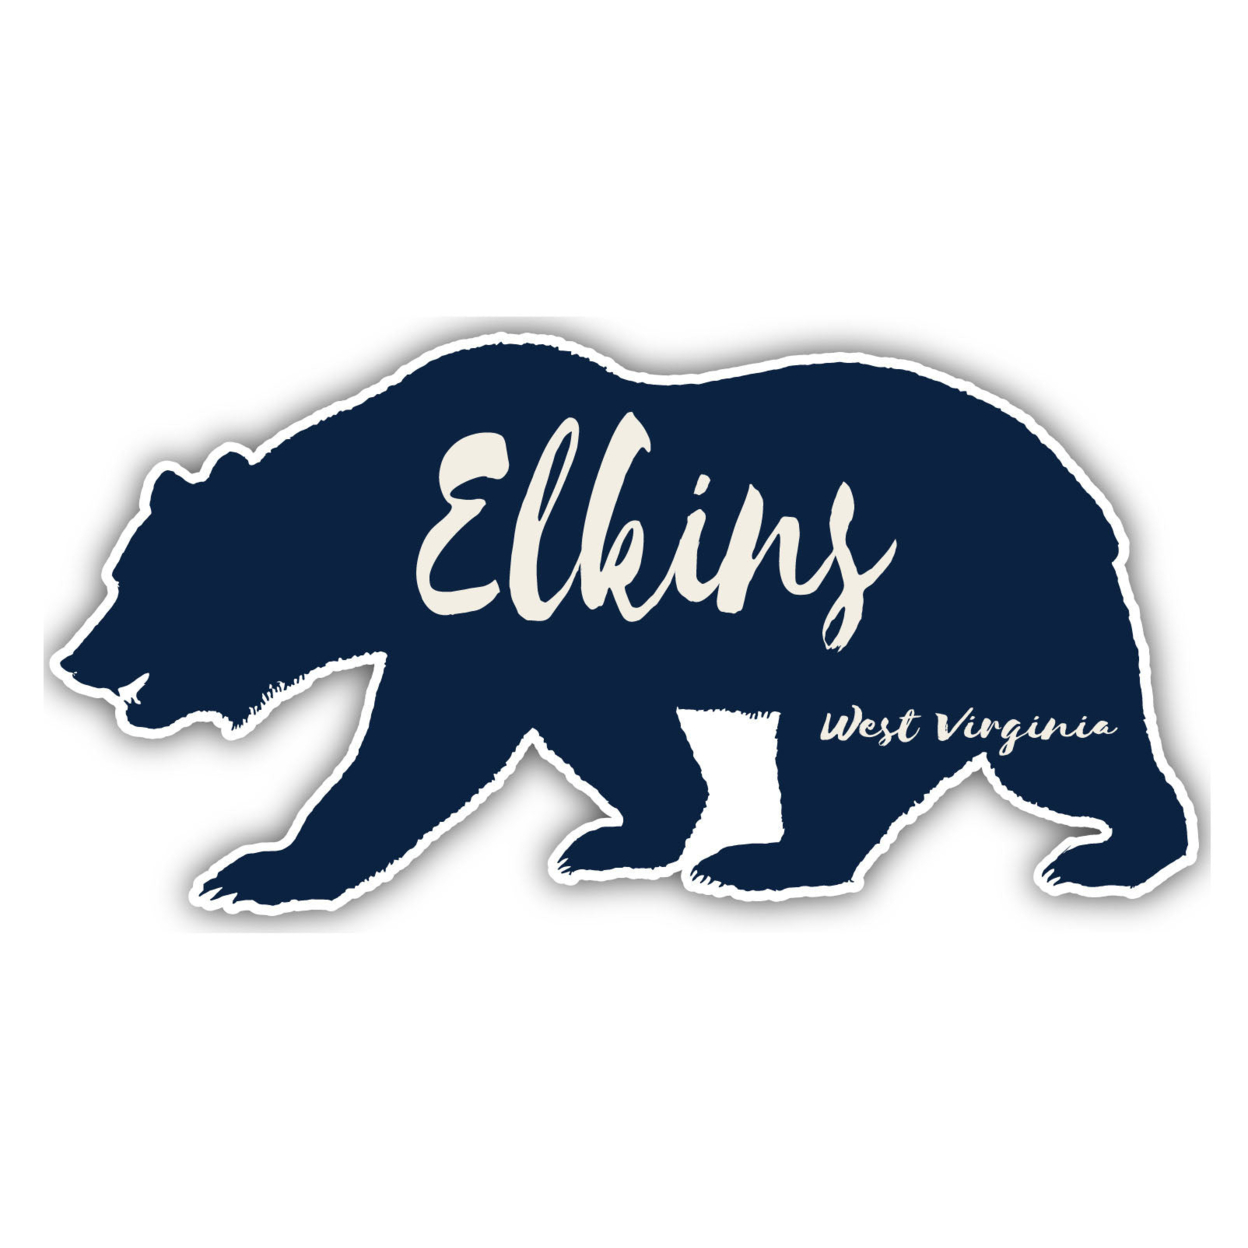 Elkins West Virginia Souvenir Decorative Stickers (Choose Theme And Size) - 4-Pack, 6-Inch, Tent